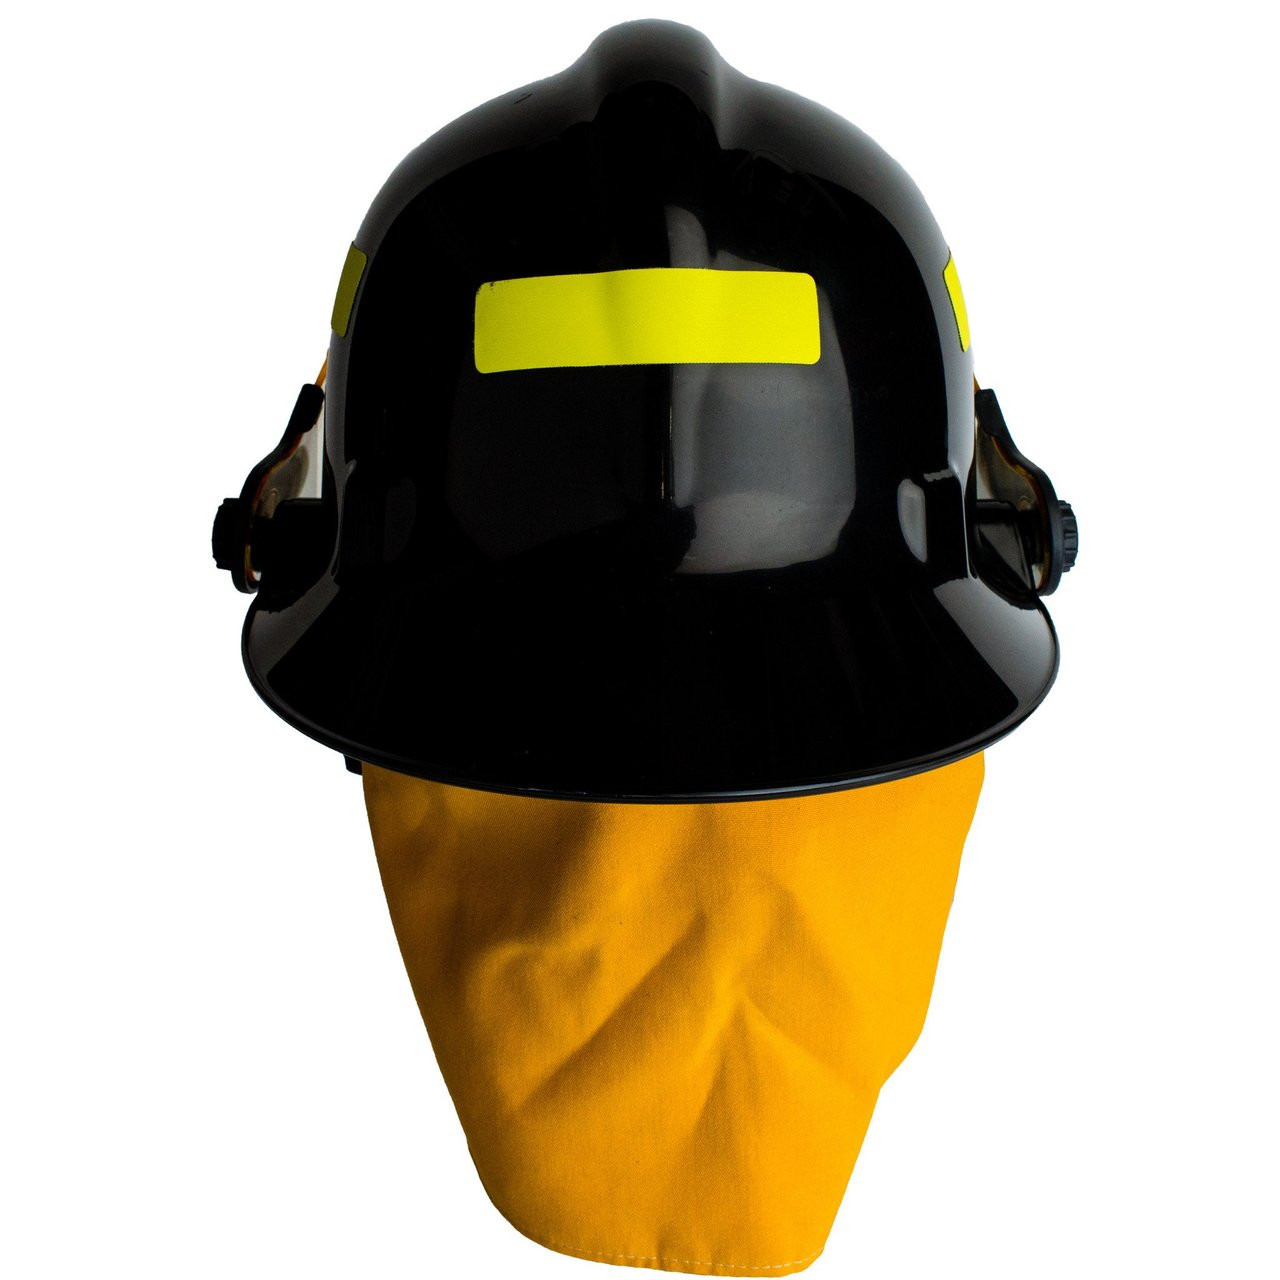 Phenix First Due Structural Fire Helmet